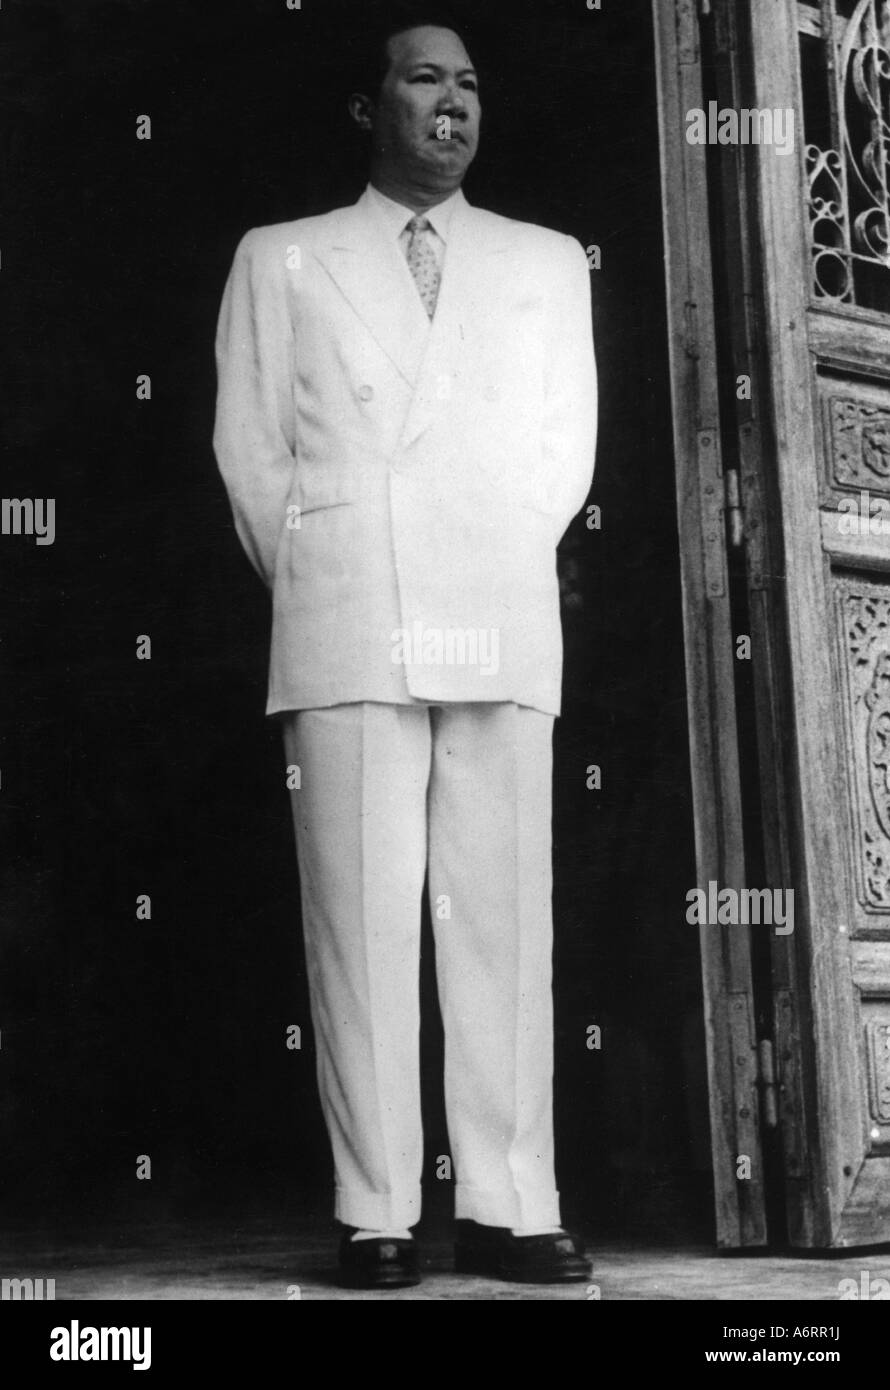 Bao Dai, 22.10.1913 - 31.7.1997, Emperor of Vietnam 1926 - 1945, Head of State of the Republik of Vietnam 1949 - 1954, full leng Stock Photo